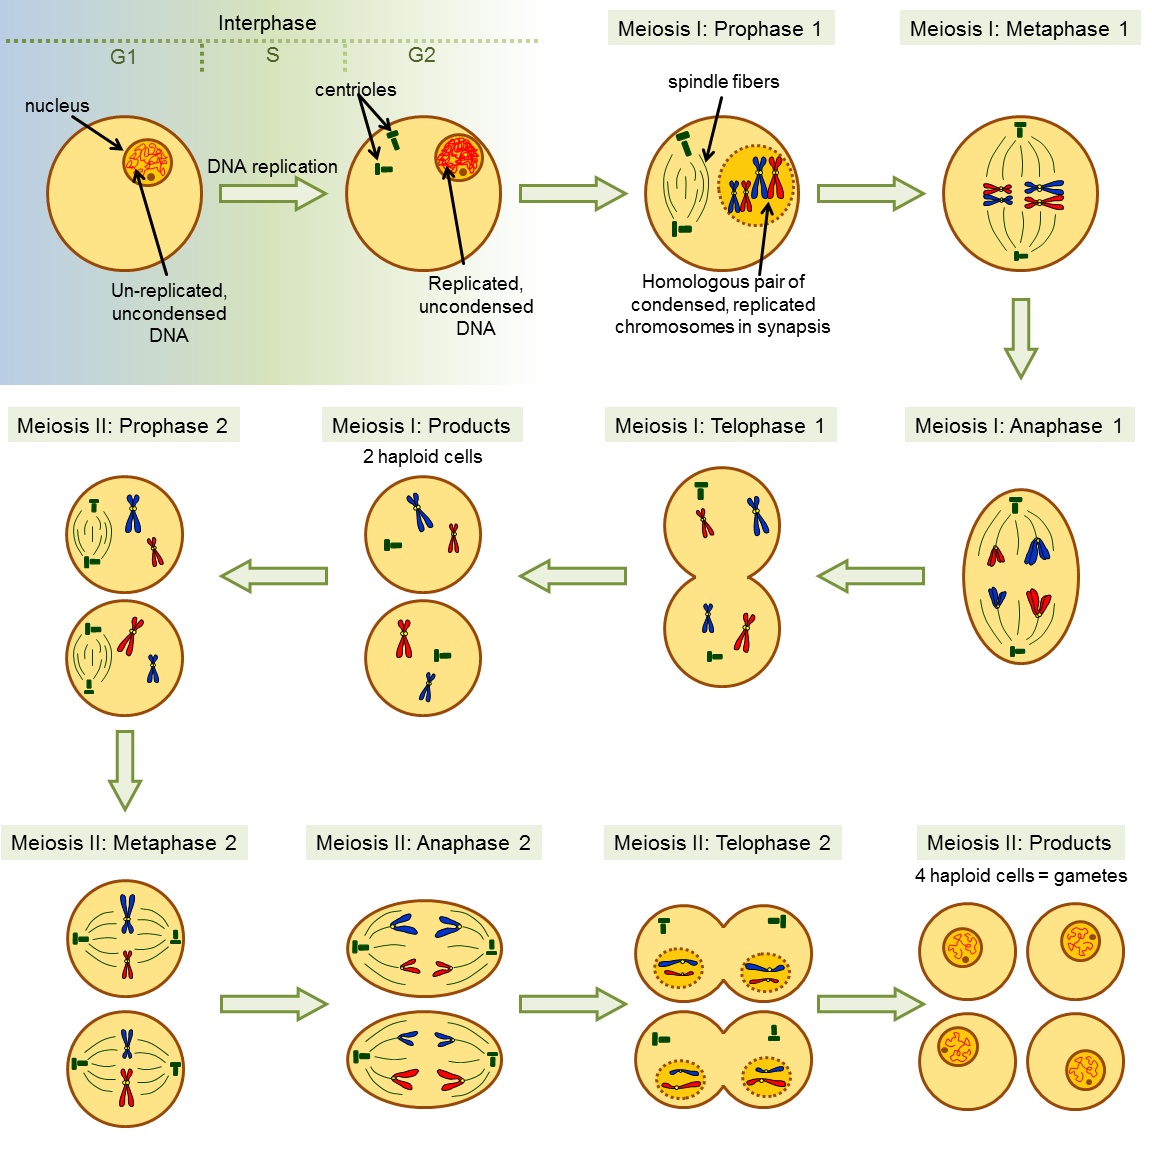 Meiosis for 2 pairs of homologous chromosomes.